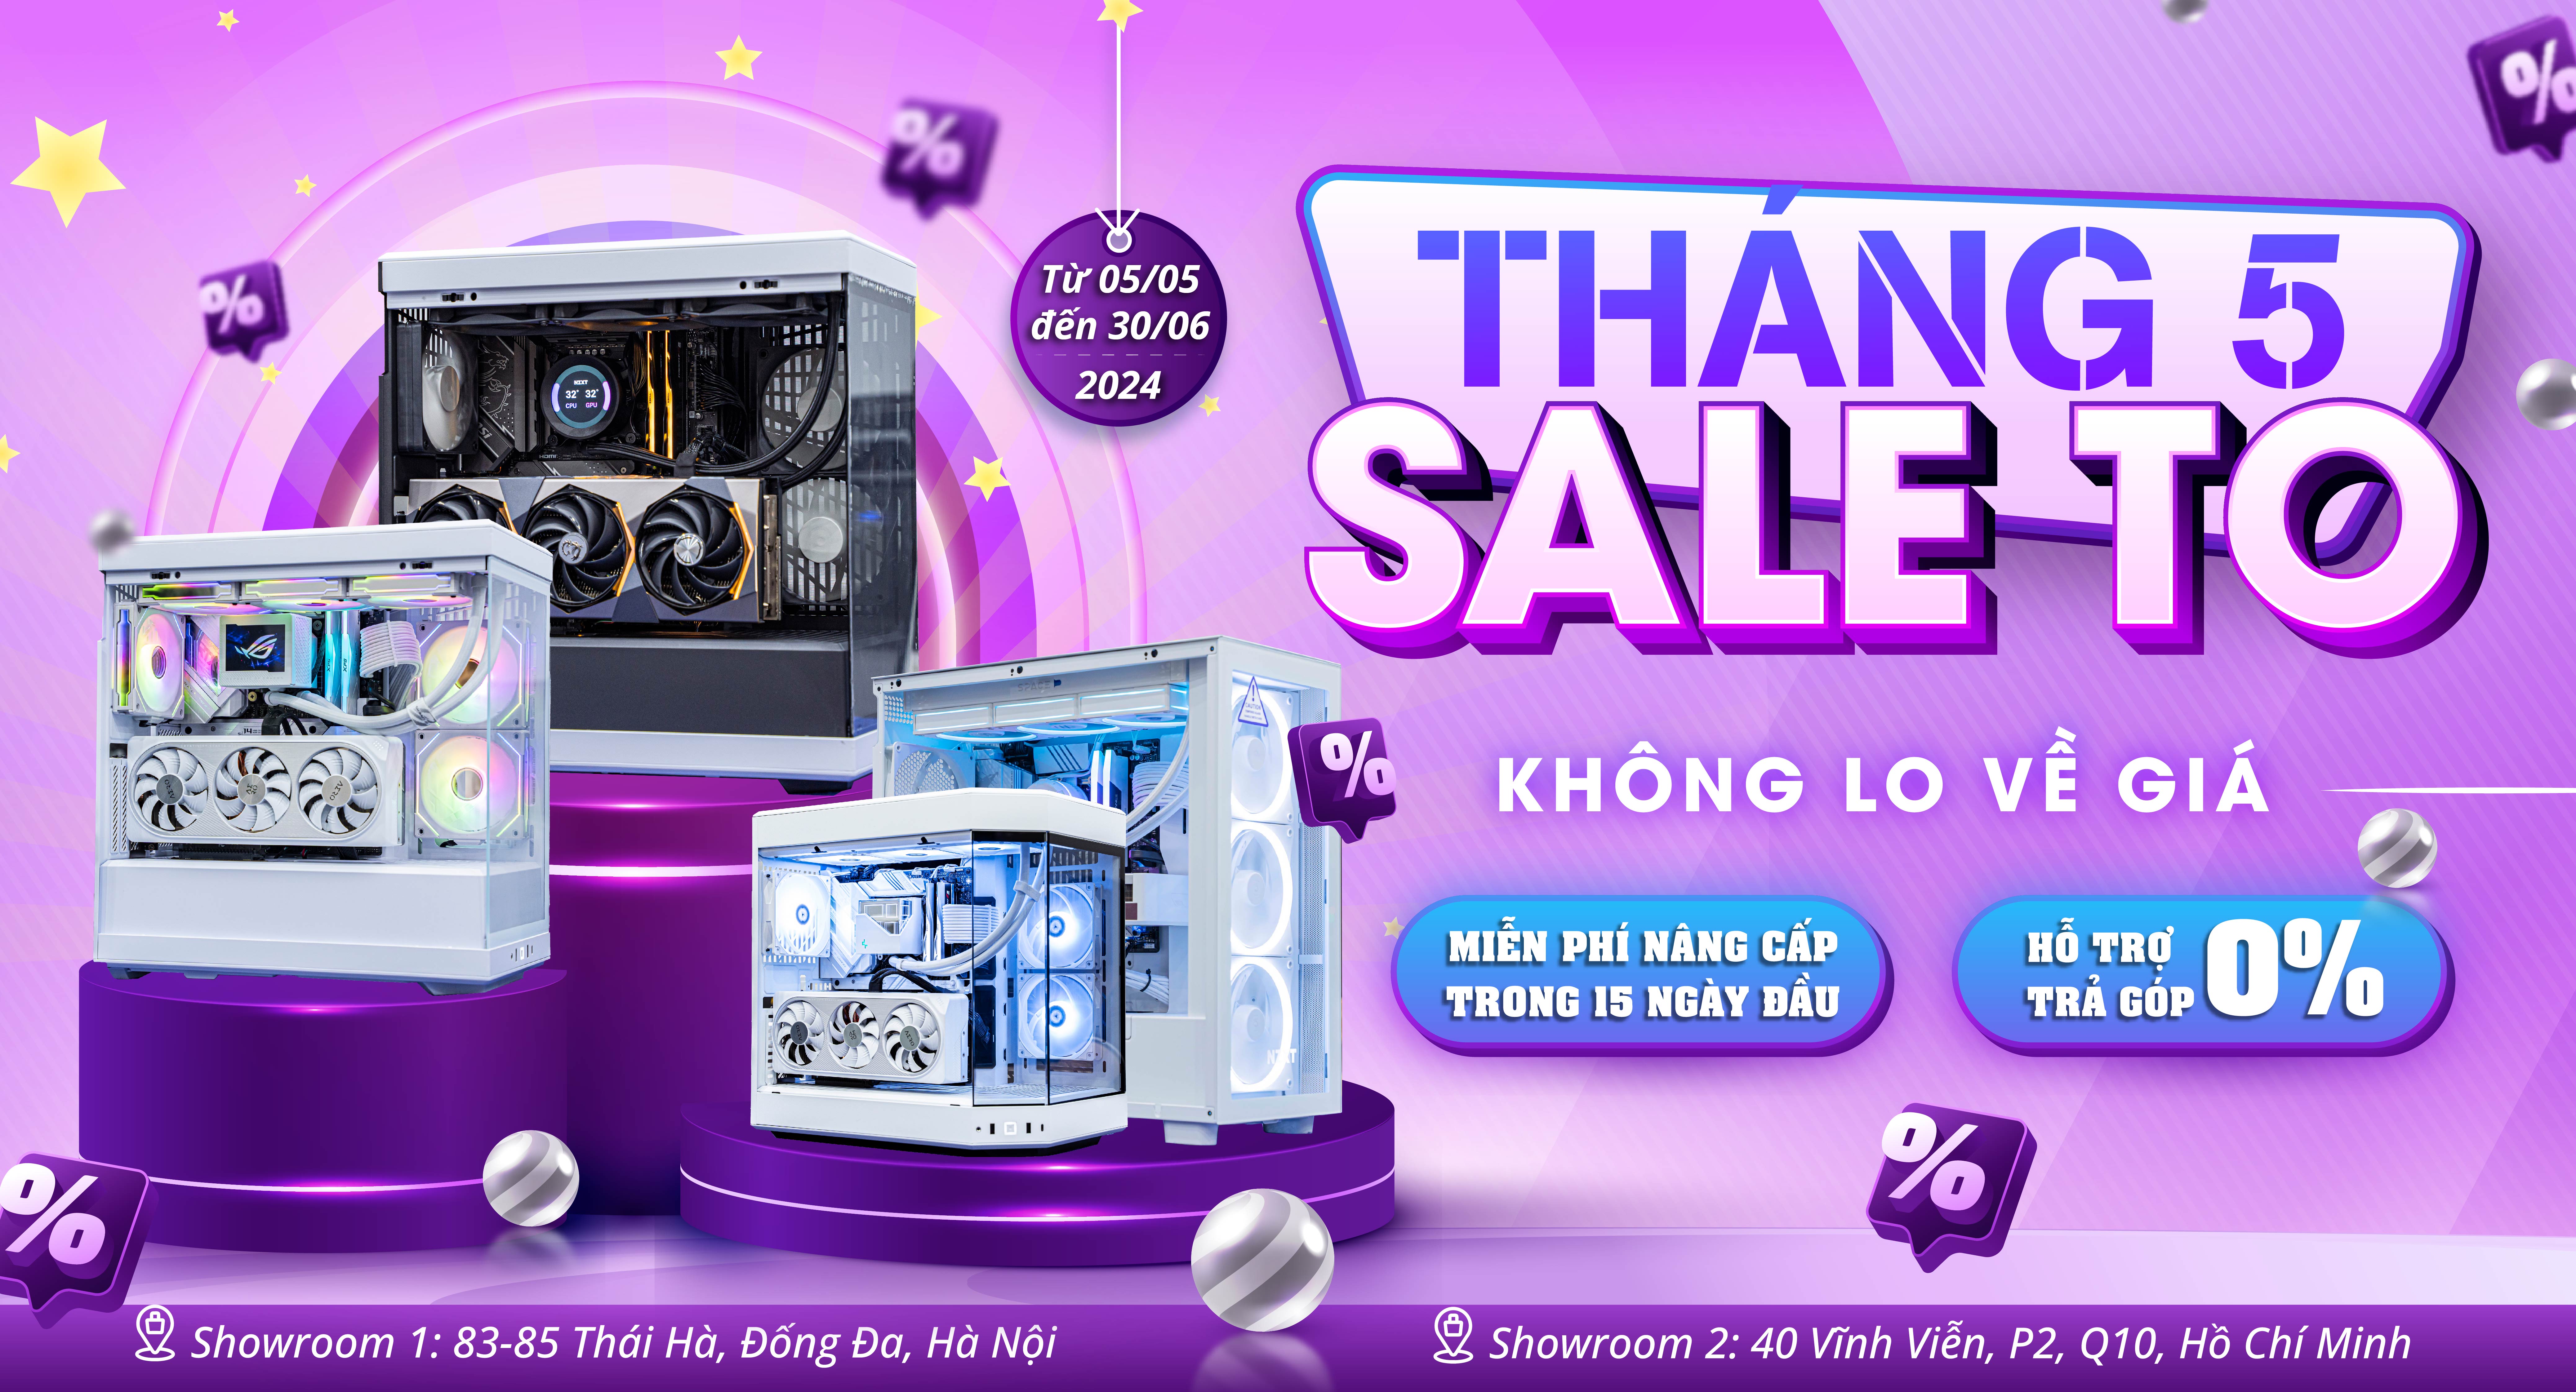 TTG PC Sale tháng 5